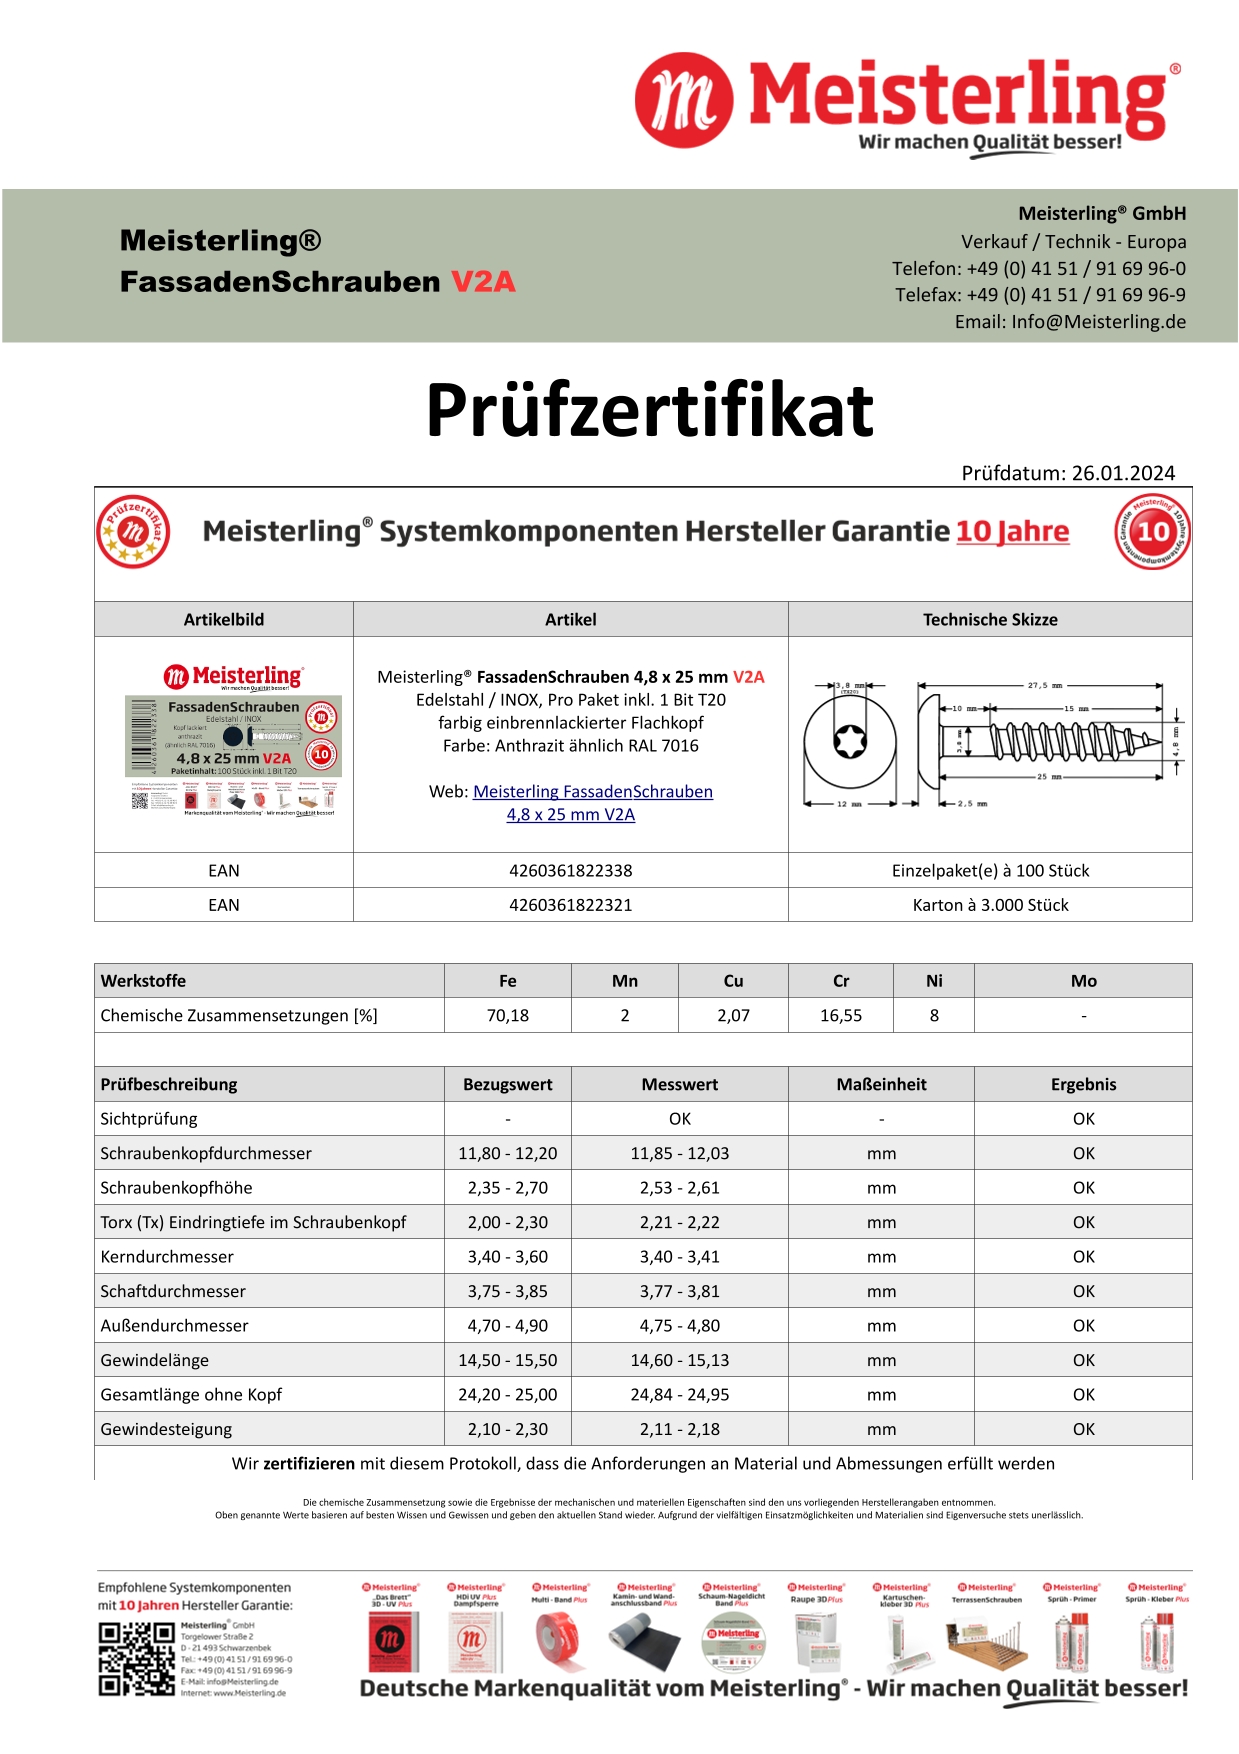 Prüfzertifikat Meisterling® FassadenSchrauben 4,8 x 25 mm V2a anthrazit